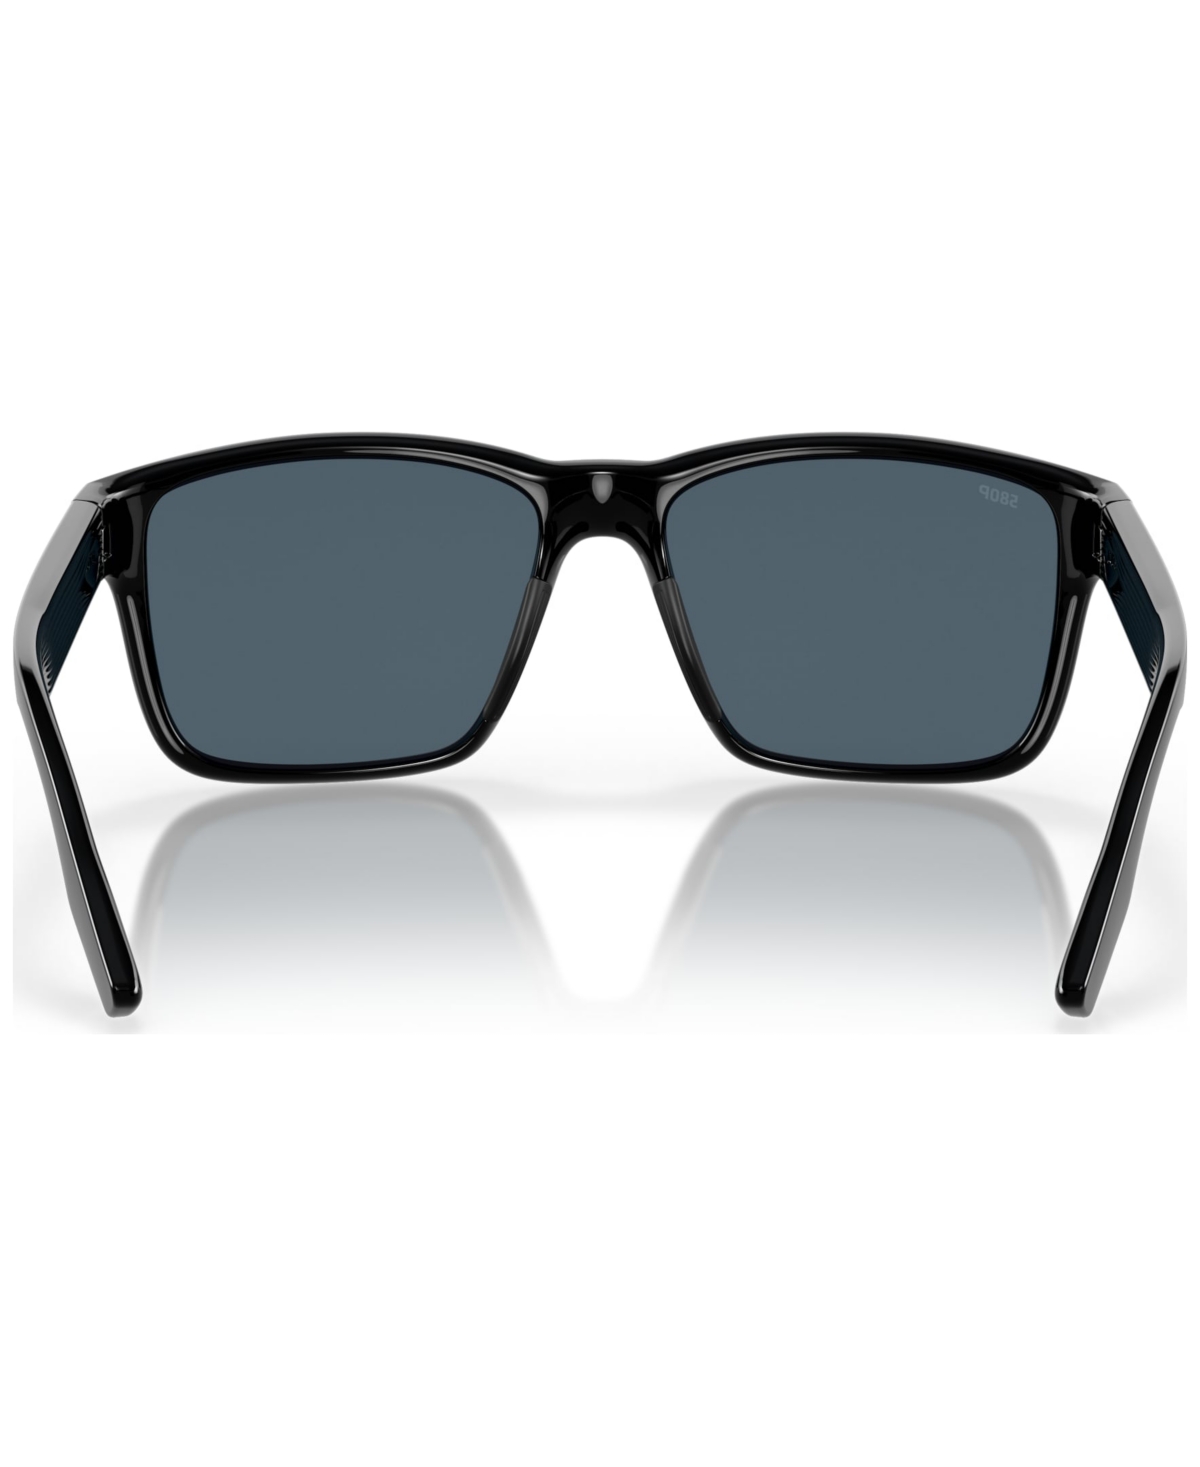 Paunch Grey Polarized Polycarbonate Mens Sunglasses 6s9049 904903 57 In  Black / Grey